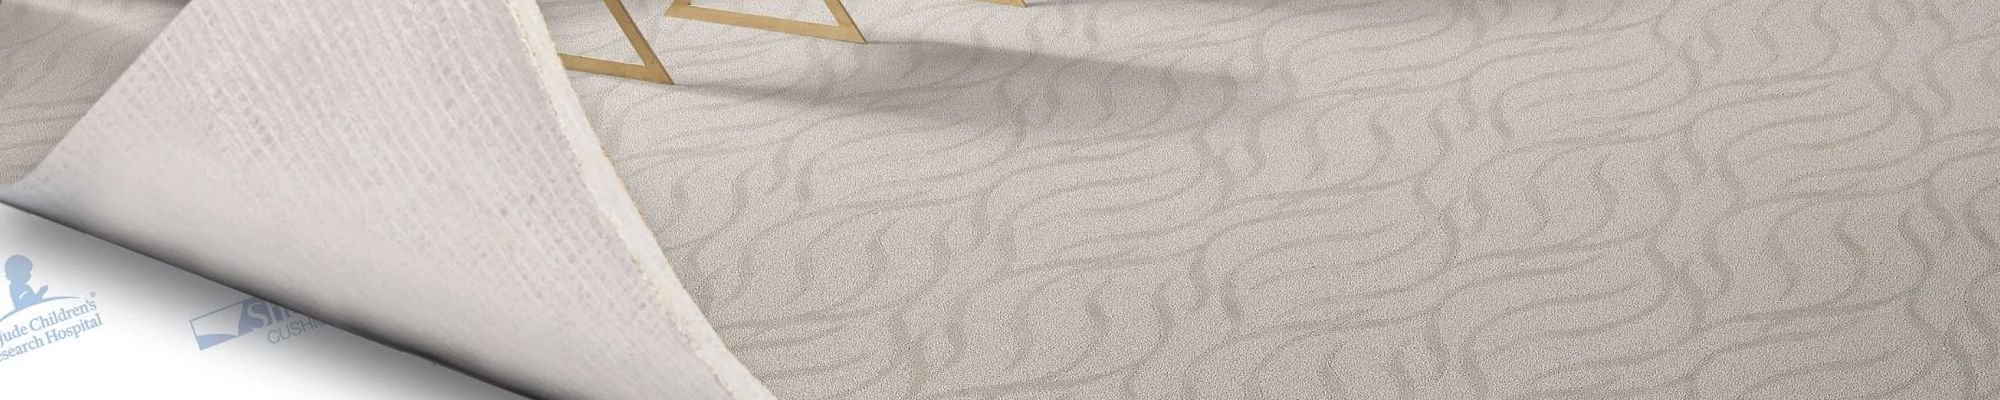 st. jude carpet cushion from Carpet Plus Flooring LLC